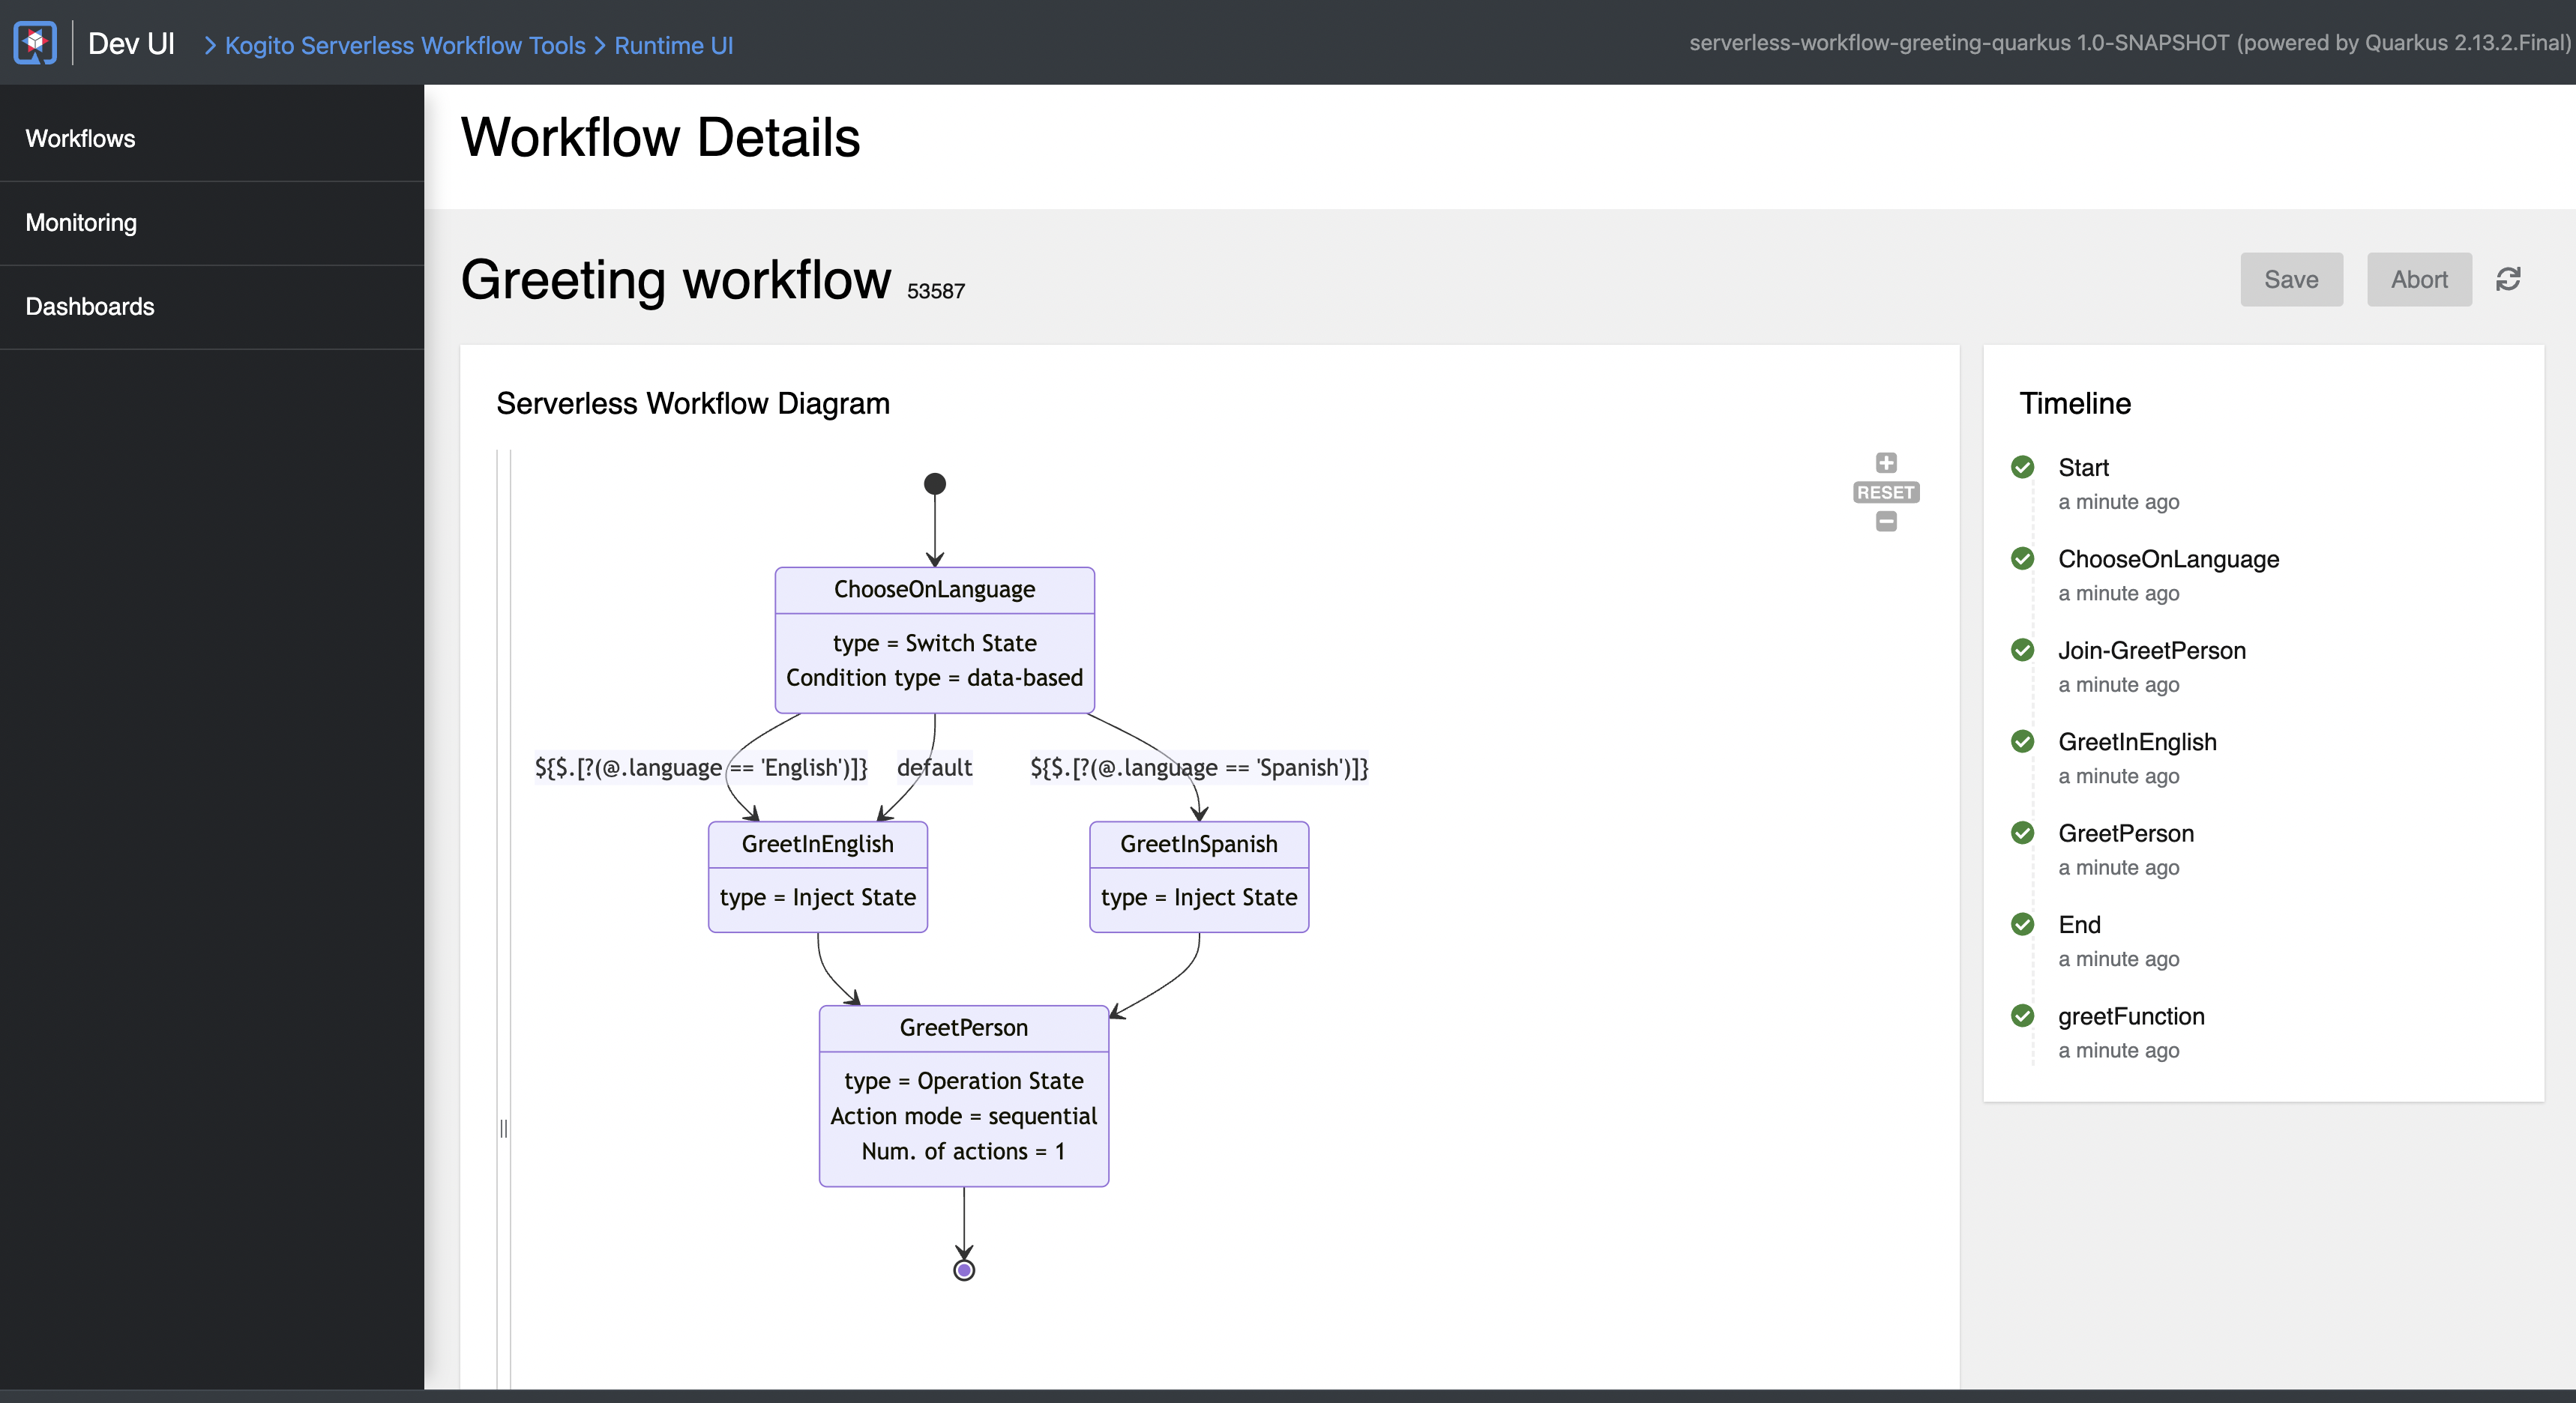 kogito swf tools workflow details page